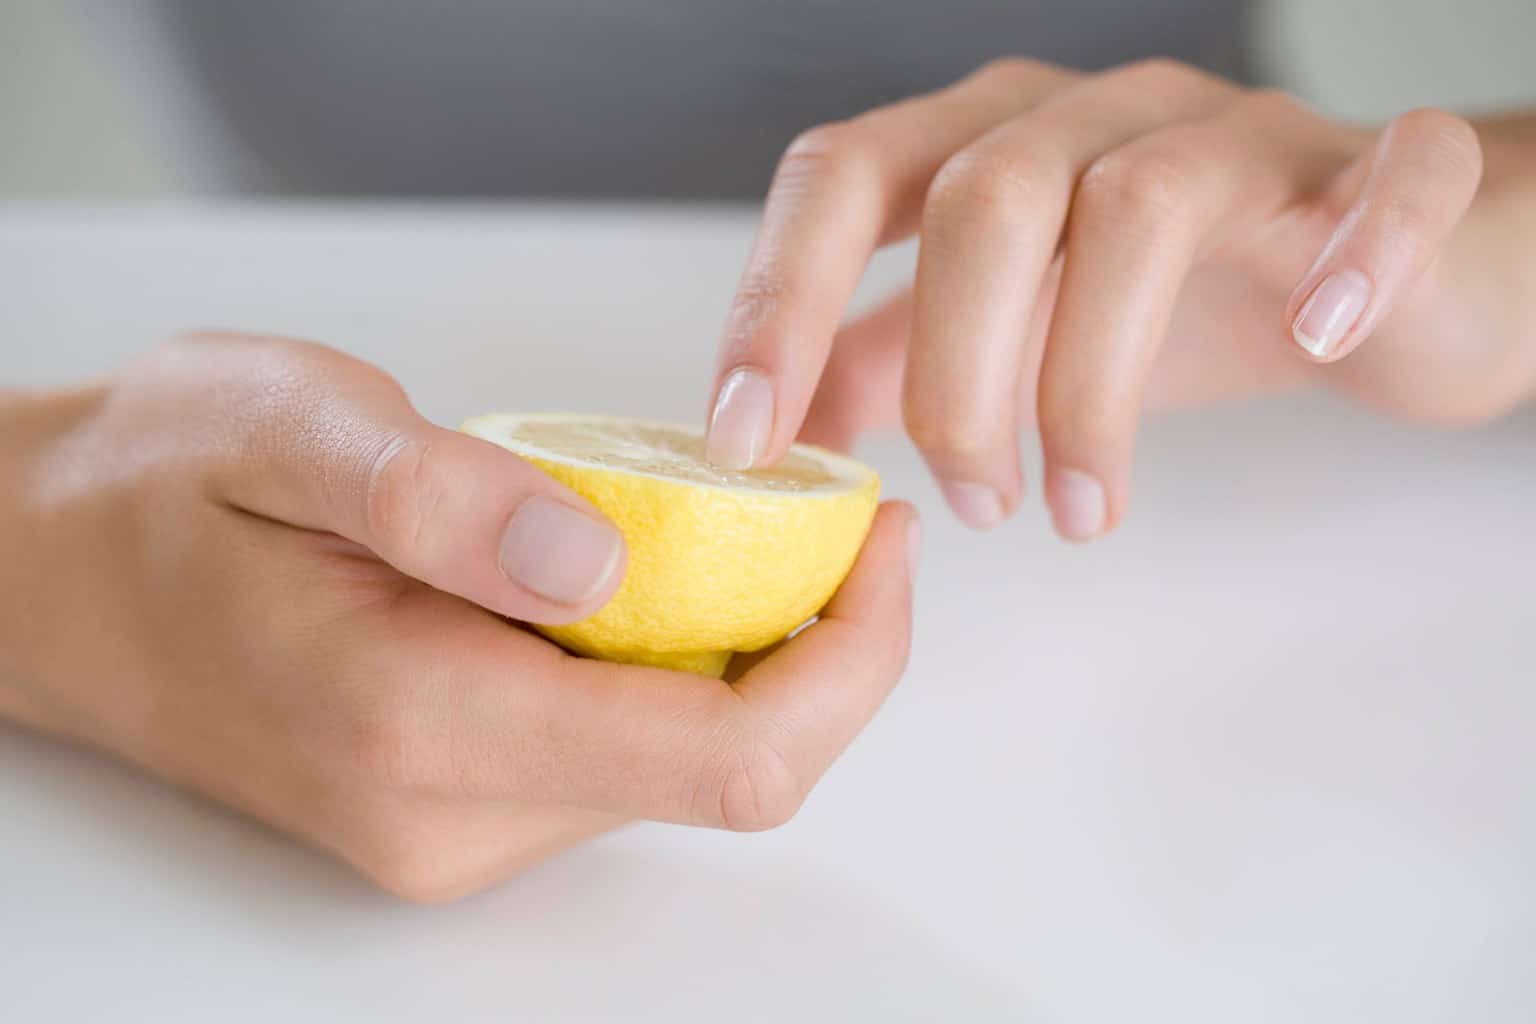 grow nails faster using lemon